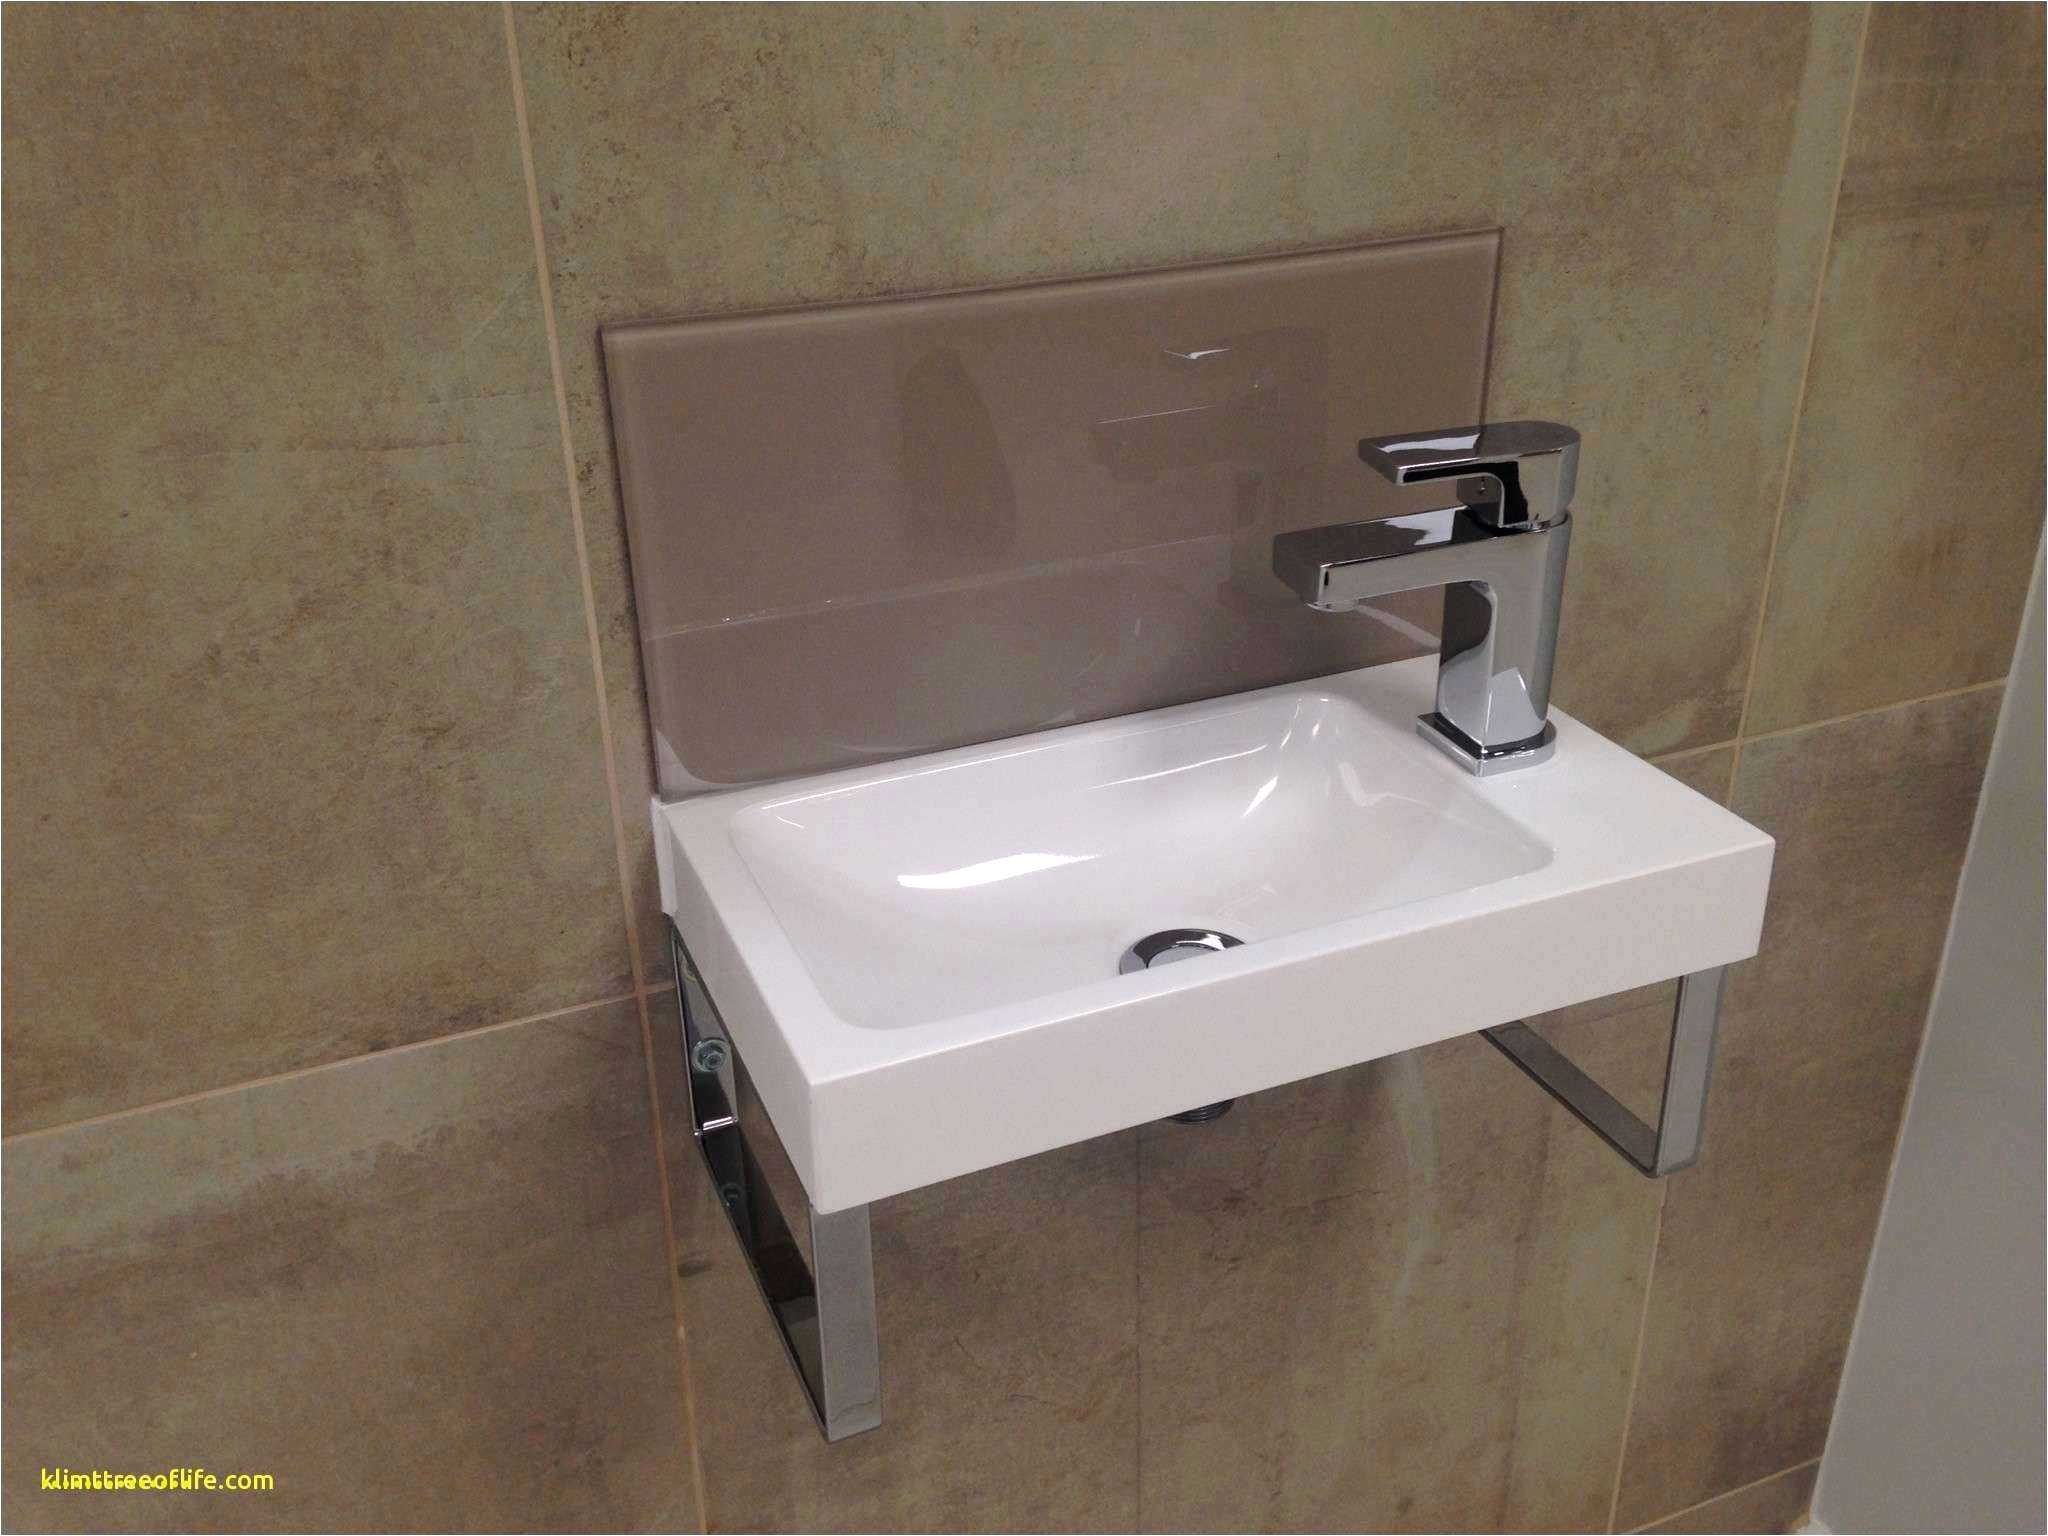 Luxury Bathroom Picture Ideas Lovely Tag toilet Ideas 0d Best Design Bathroom towel Ideas